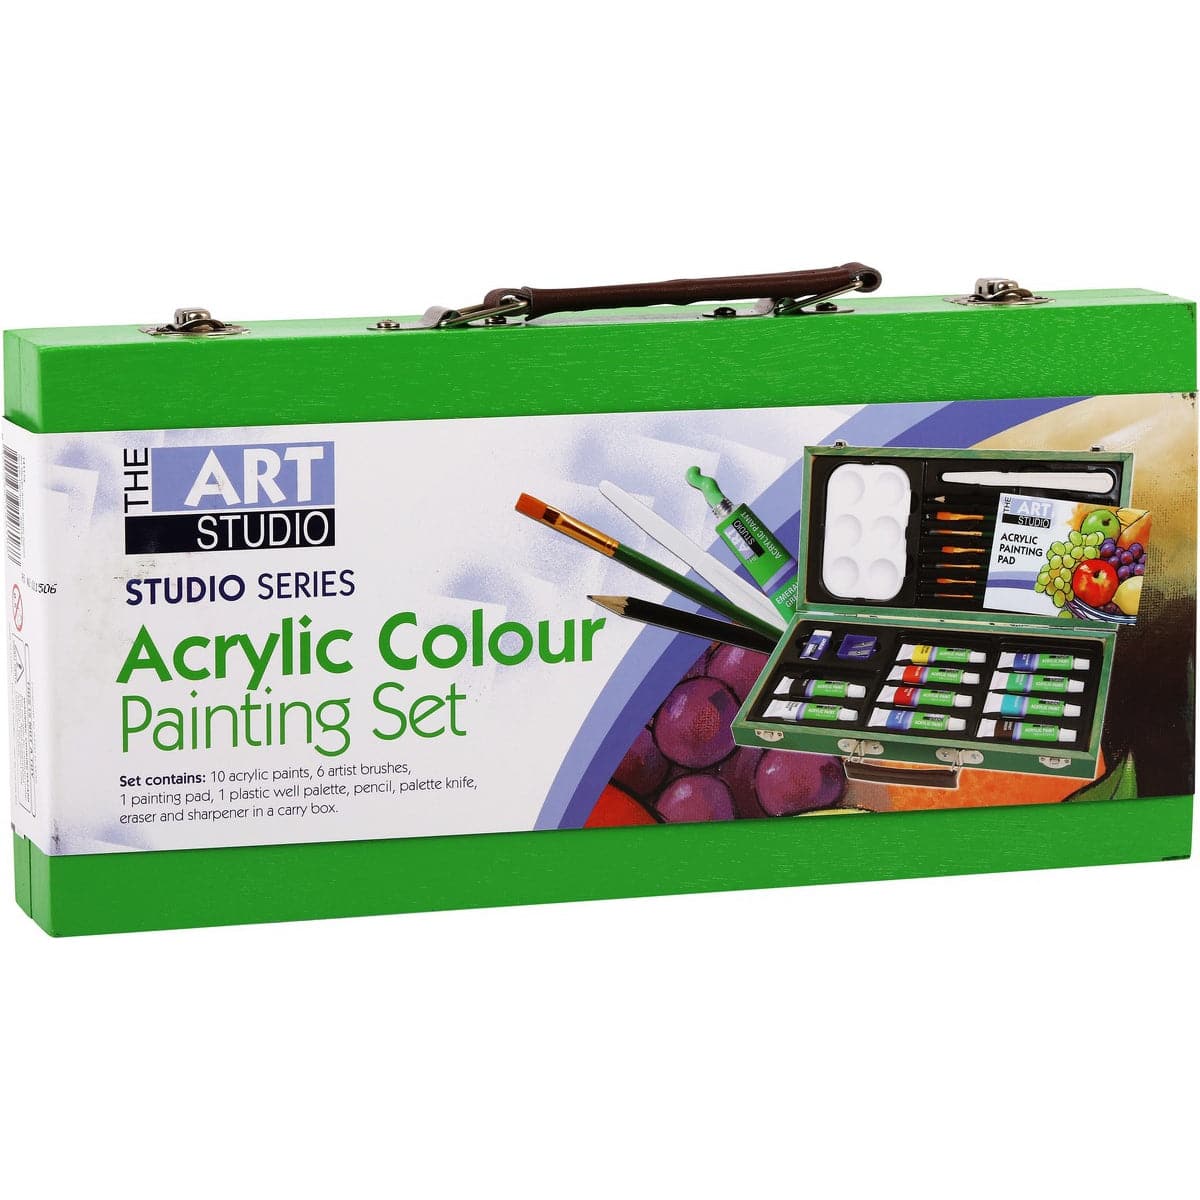 Image of The Art Studio Acrylic Painting Set Studio Series